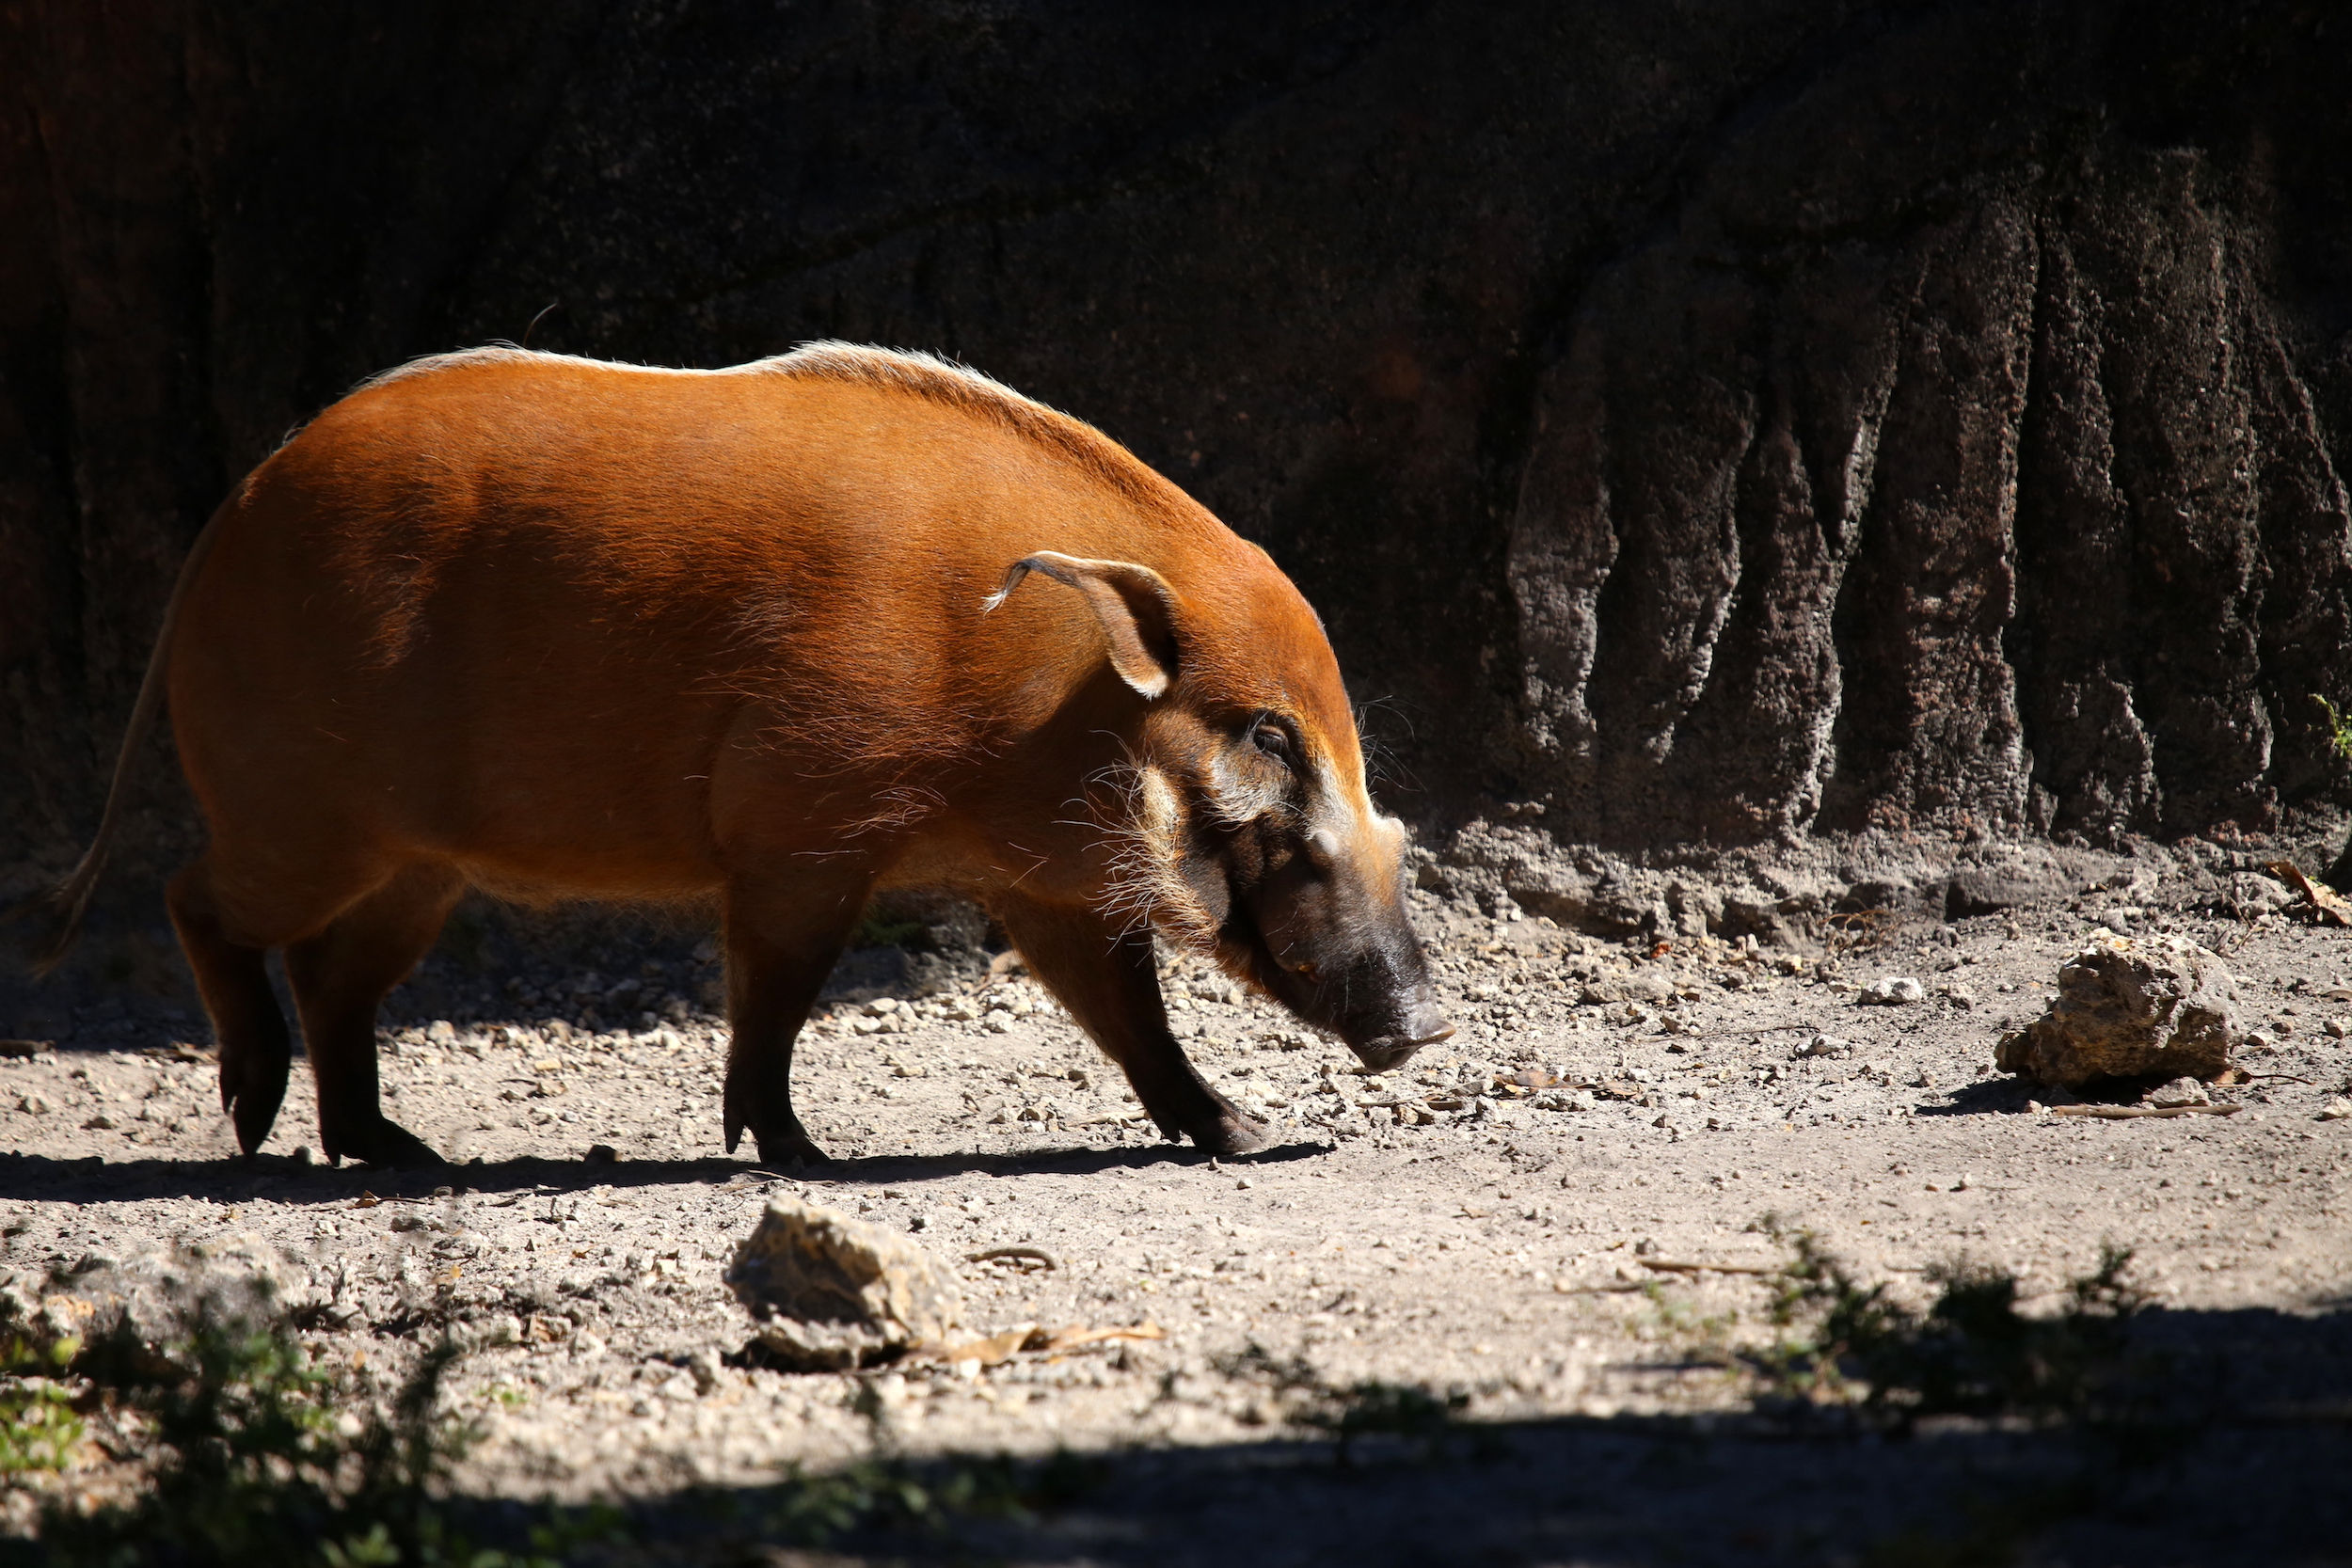 Do You Know the World's Weirdest Wild Pigs?